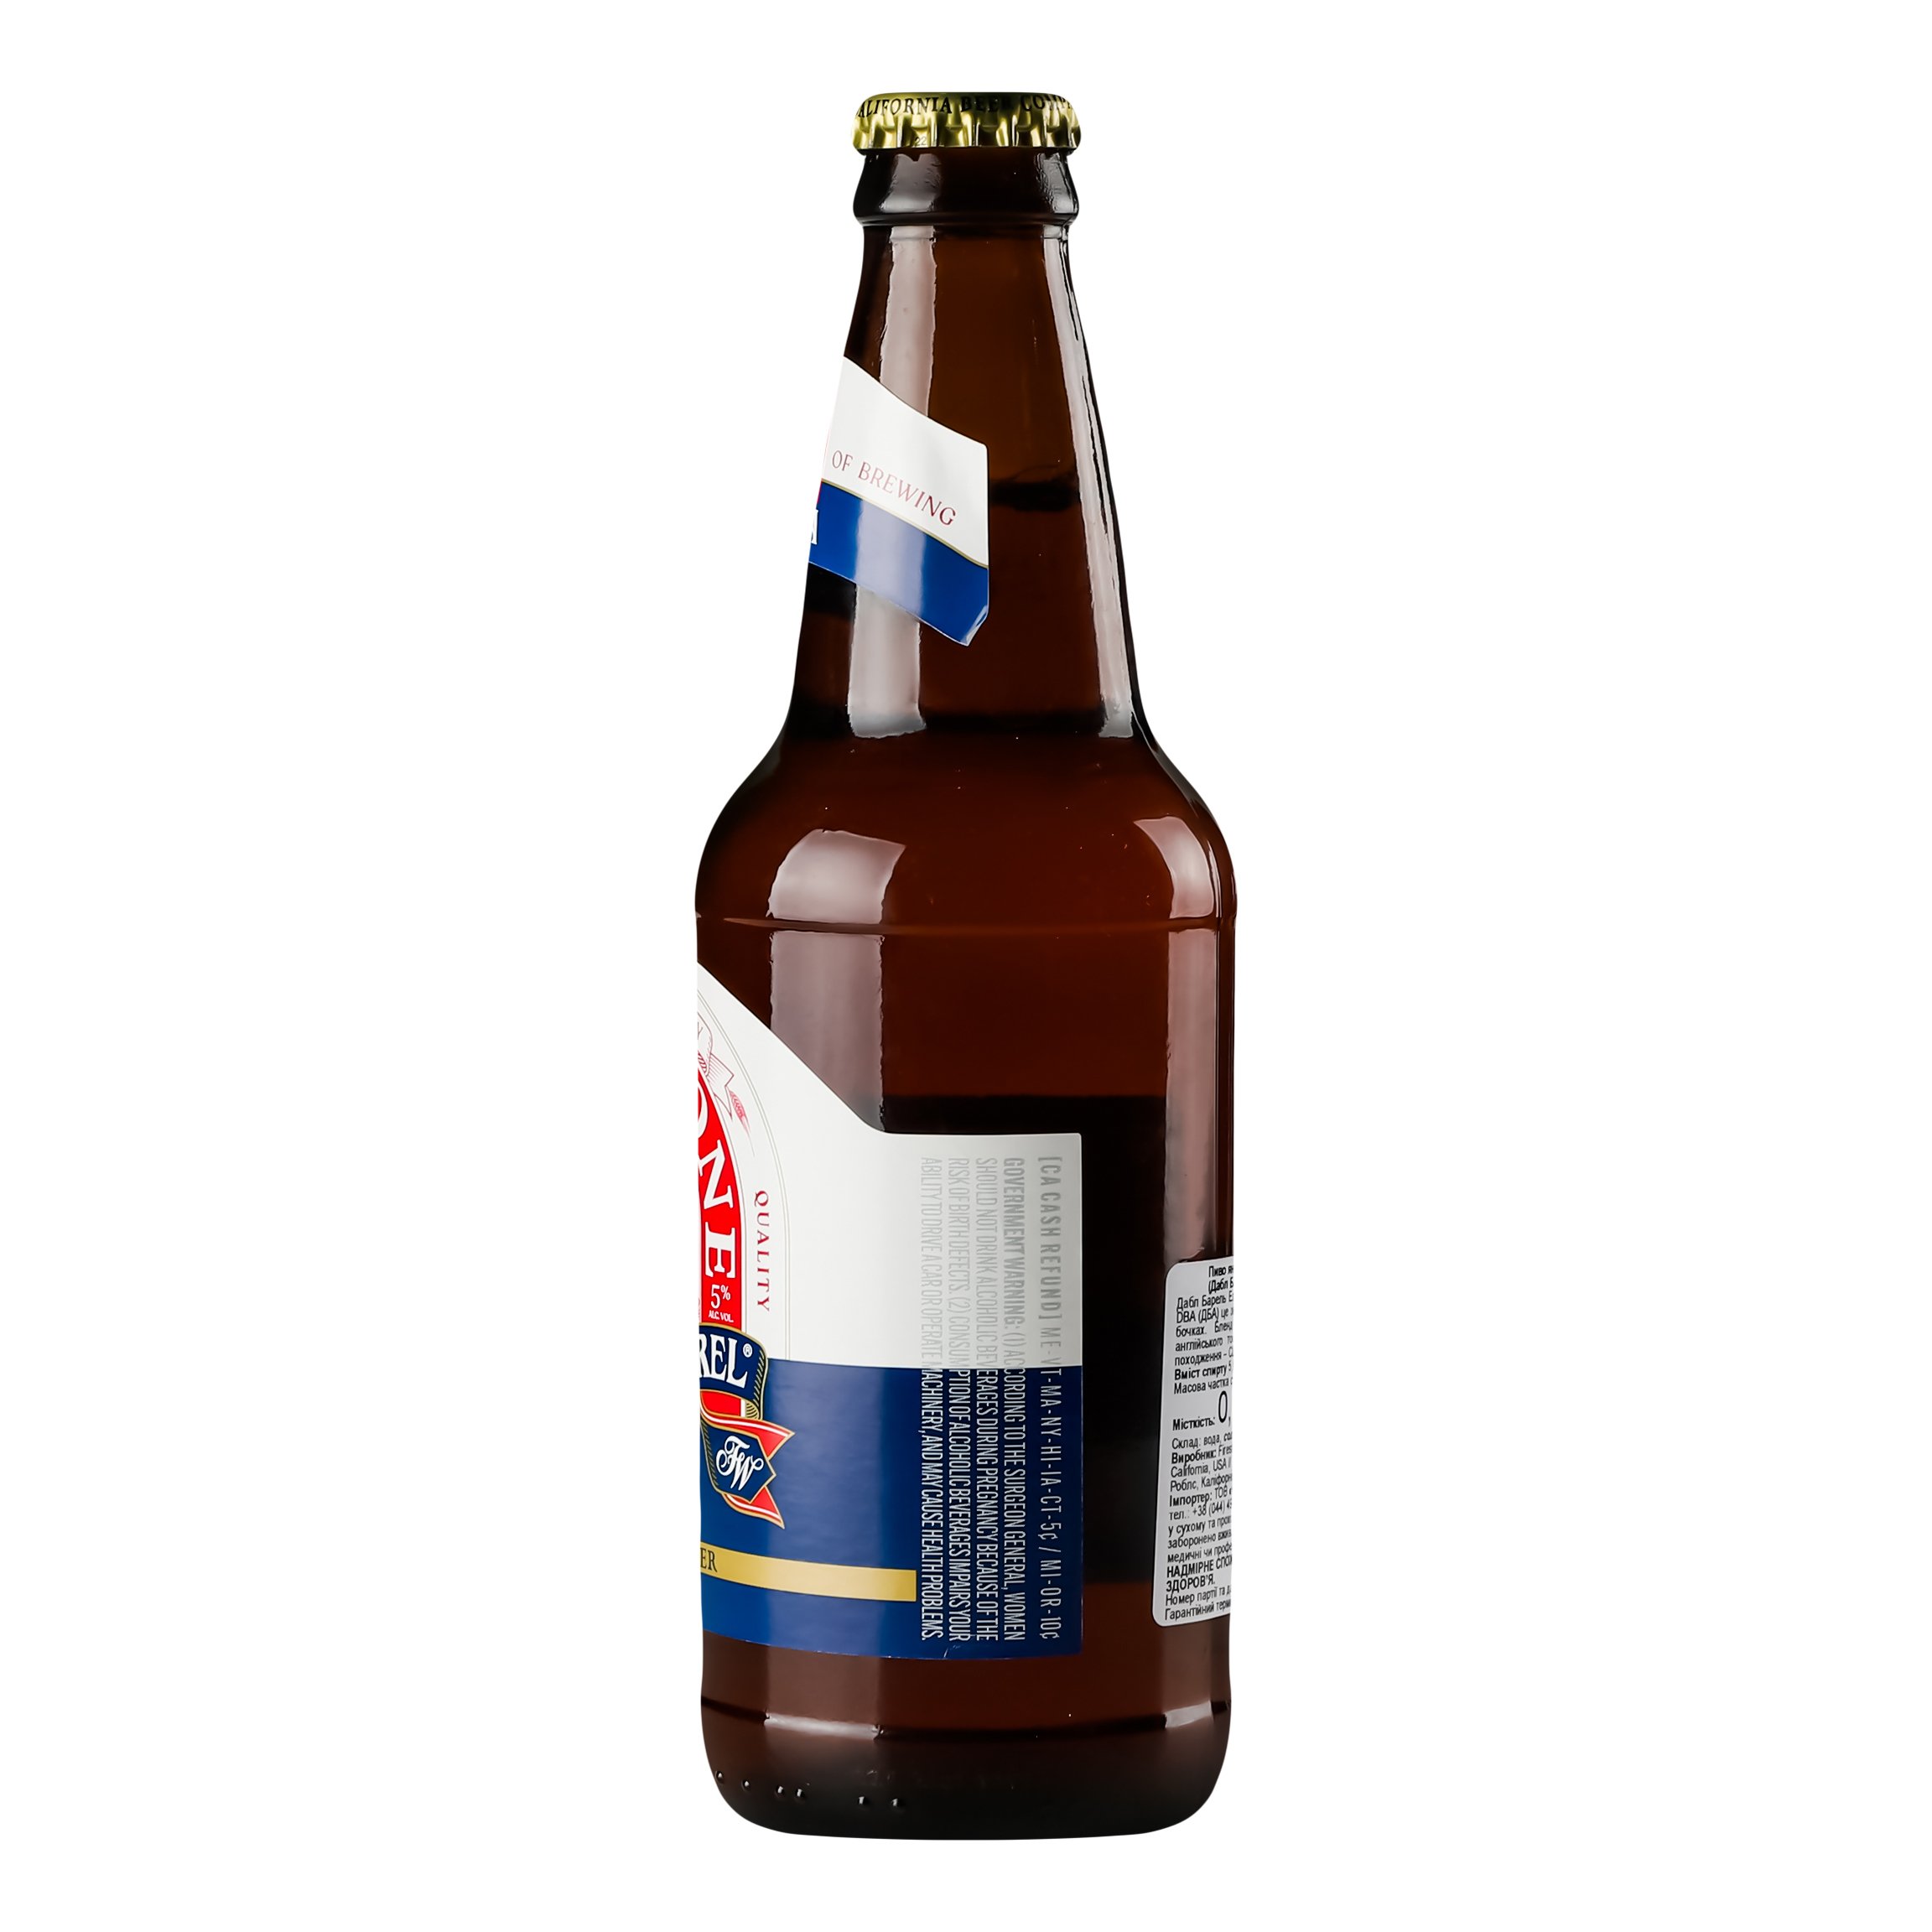 Пиво Firestone Walker DBA янтарное, 5 %,0,355 л (720722) - фото 2